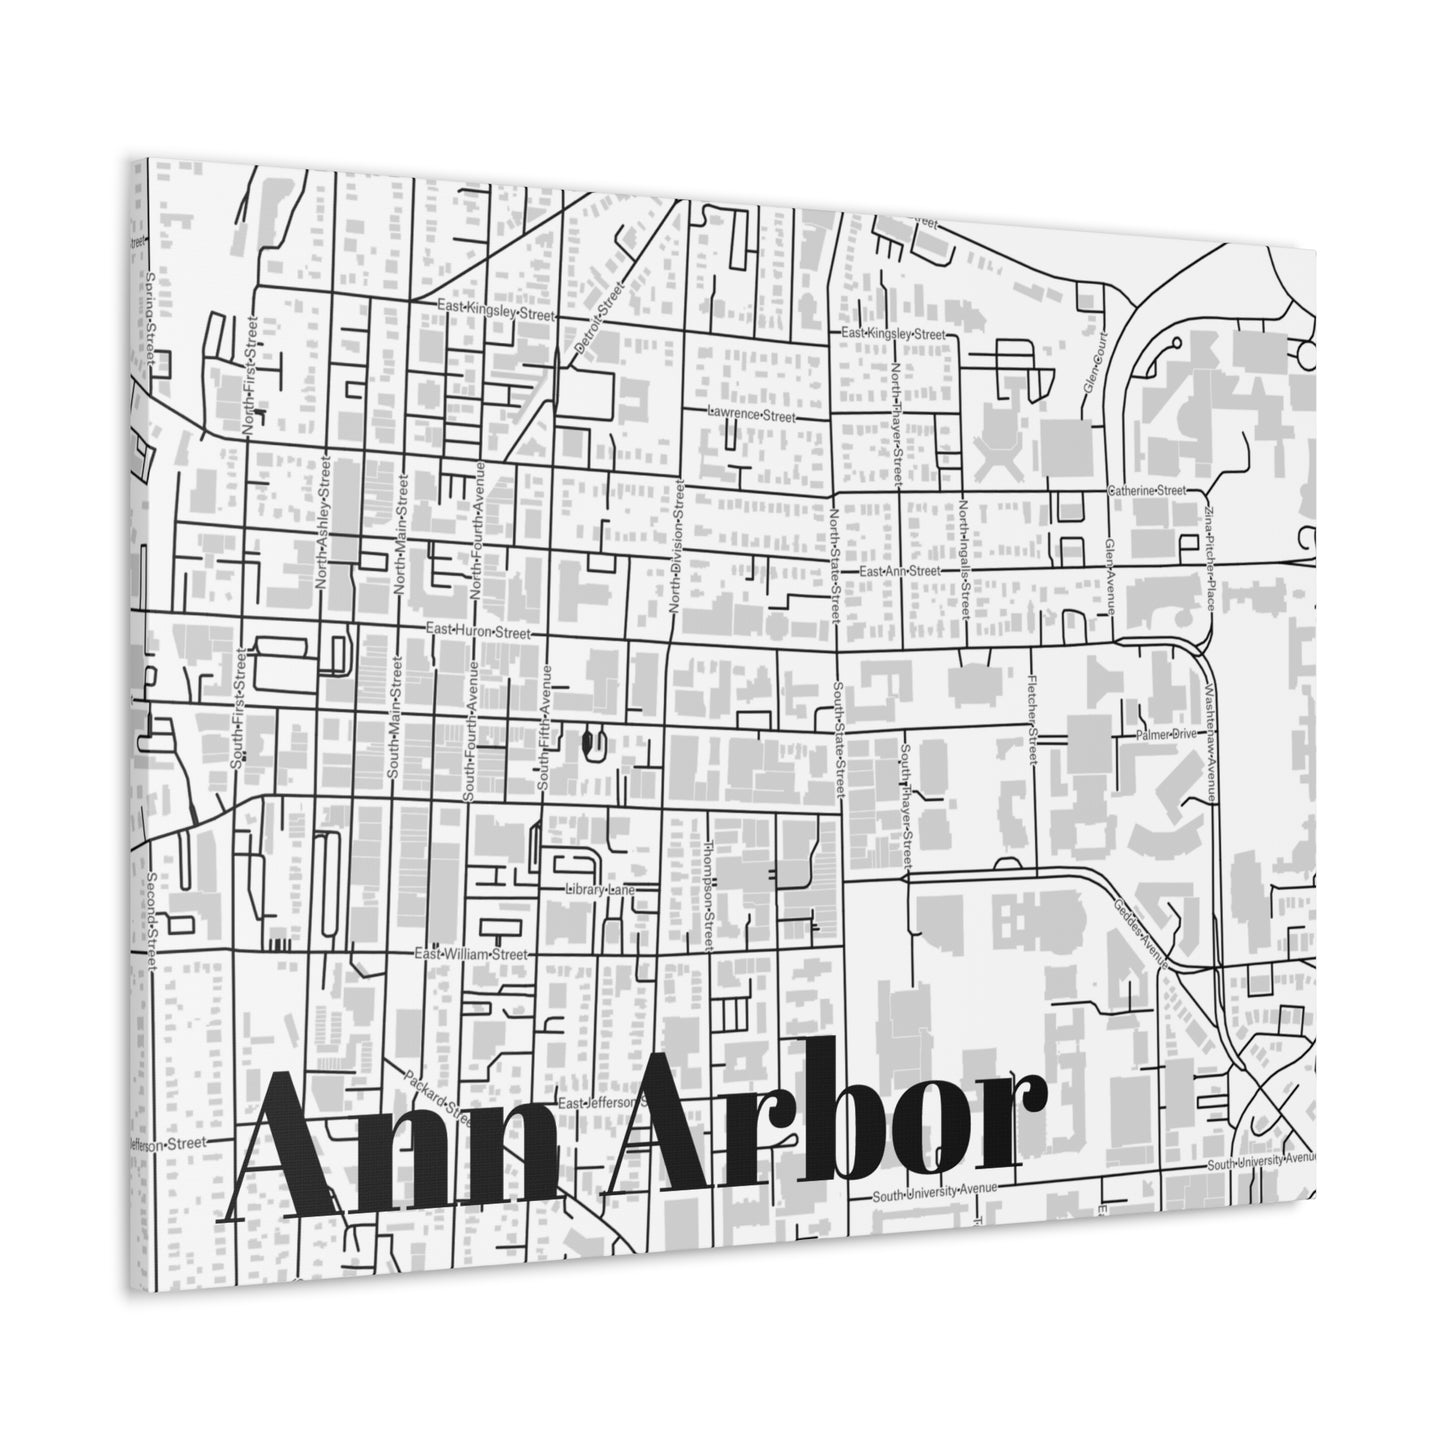 Ann Arbor (Downtown) Canvas